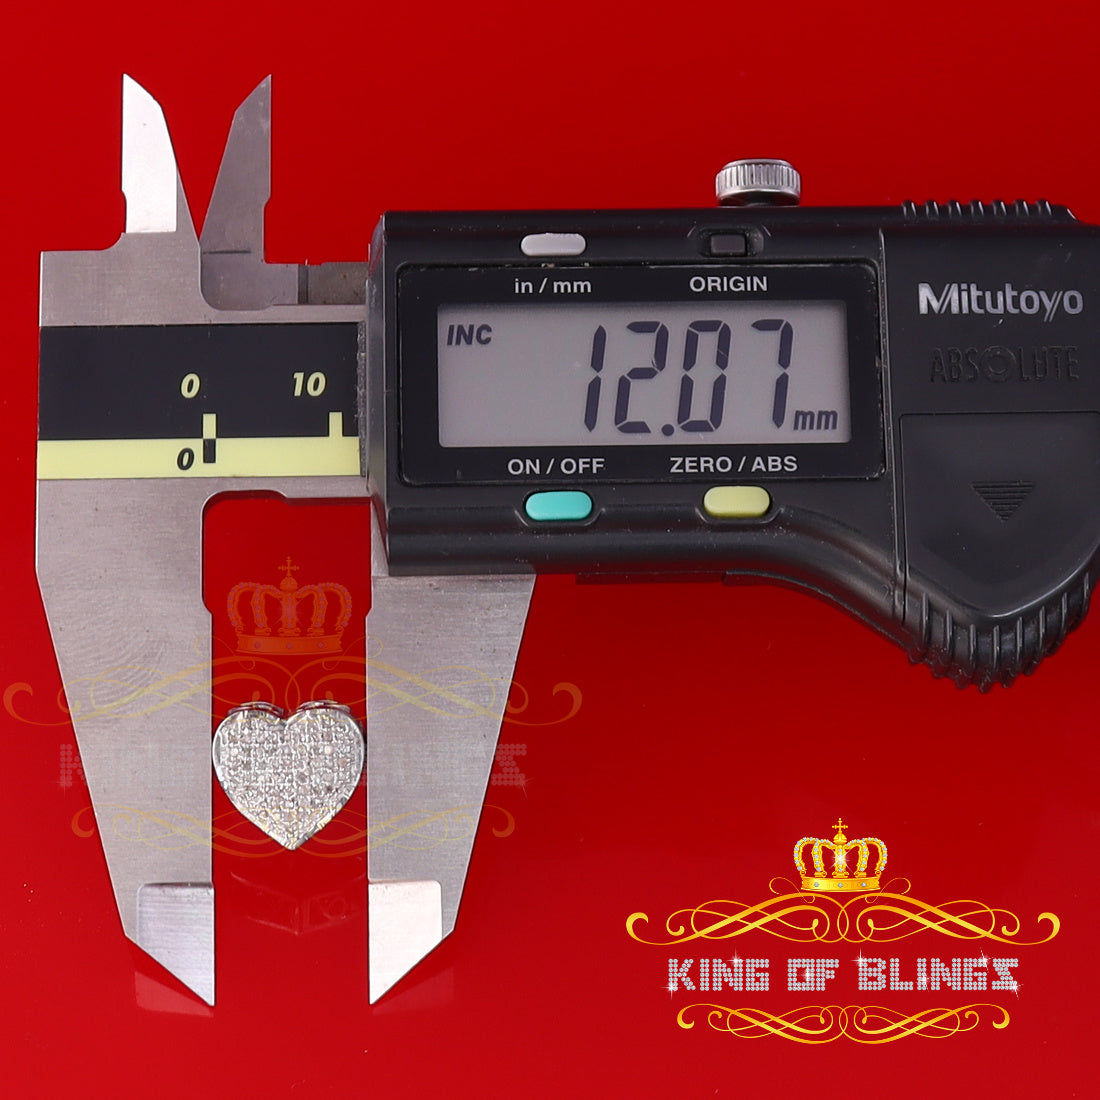 King Of Bling's Micro Pave 0.25ct Real Diamonds 925 White Silver Women's & Men's Heart Earrings KING OF BLINGS